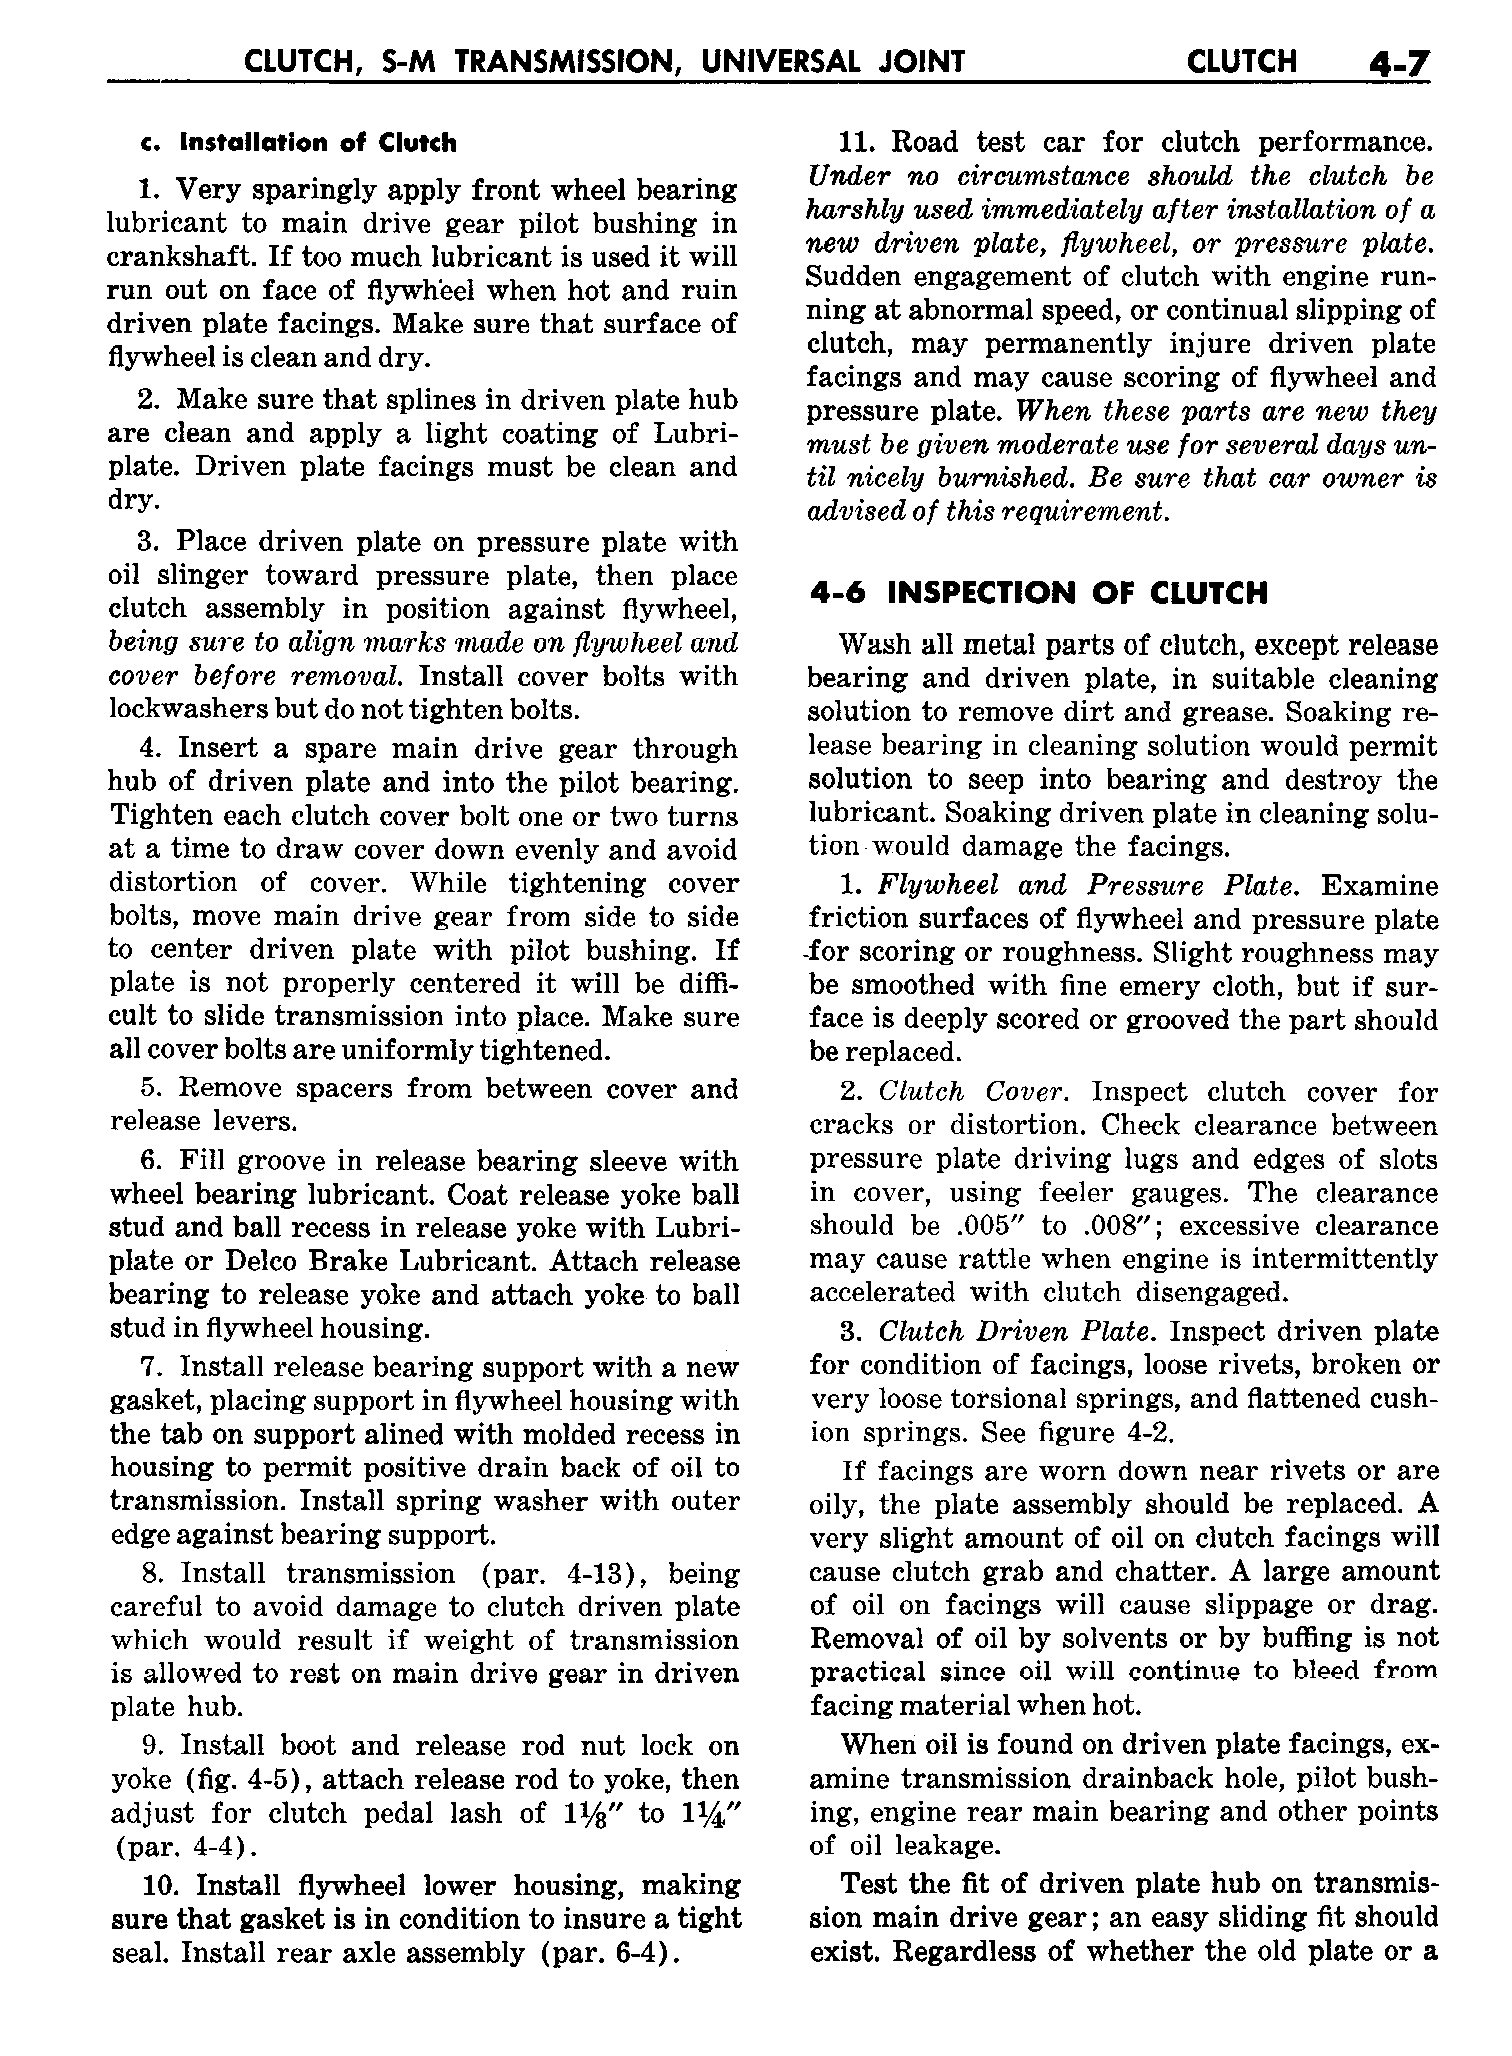 n_05 1958 Buick Shop Manual - Clutch & Man Trans_7.jpg